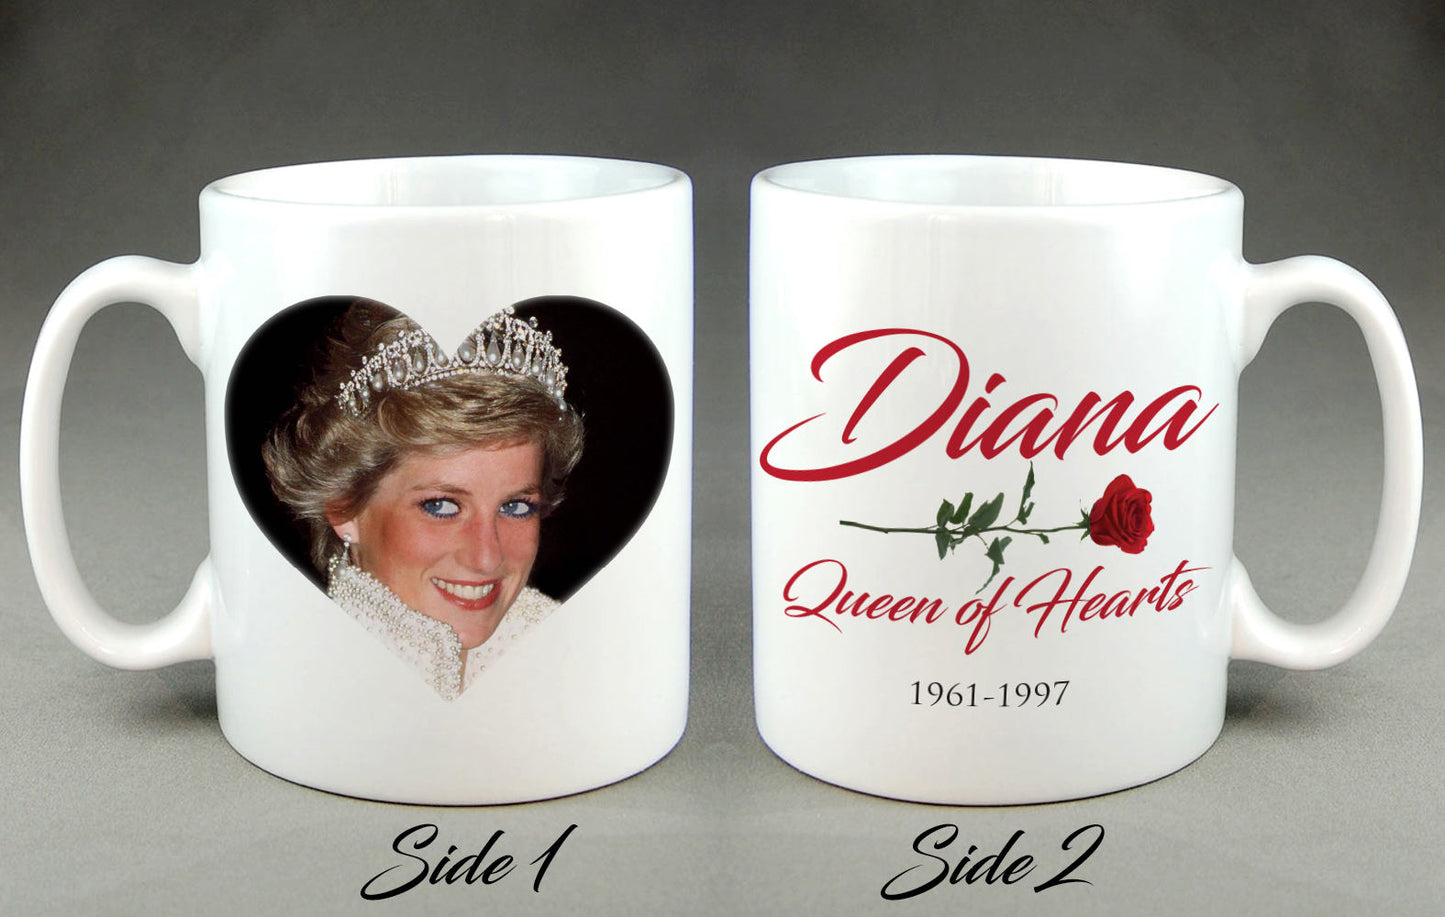 Diana, Queen of Hearts Mug - Commemorative Princess Royal 10oz Ceramic Cup